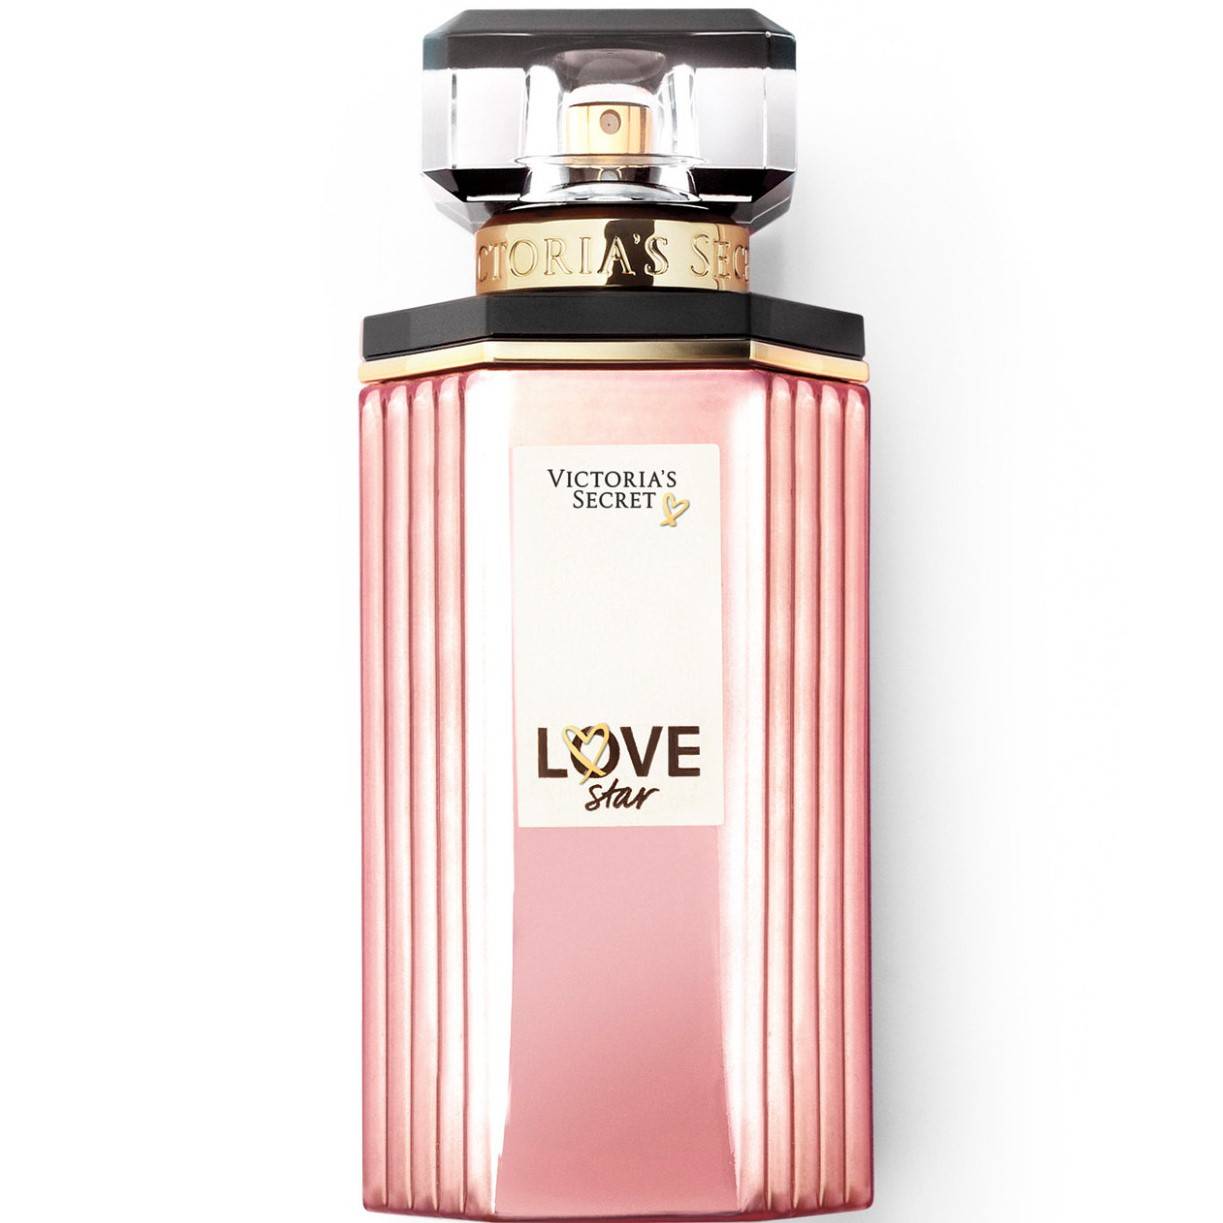 Top 15 victoria's secret perfumes for women - 2021 update